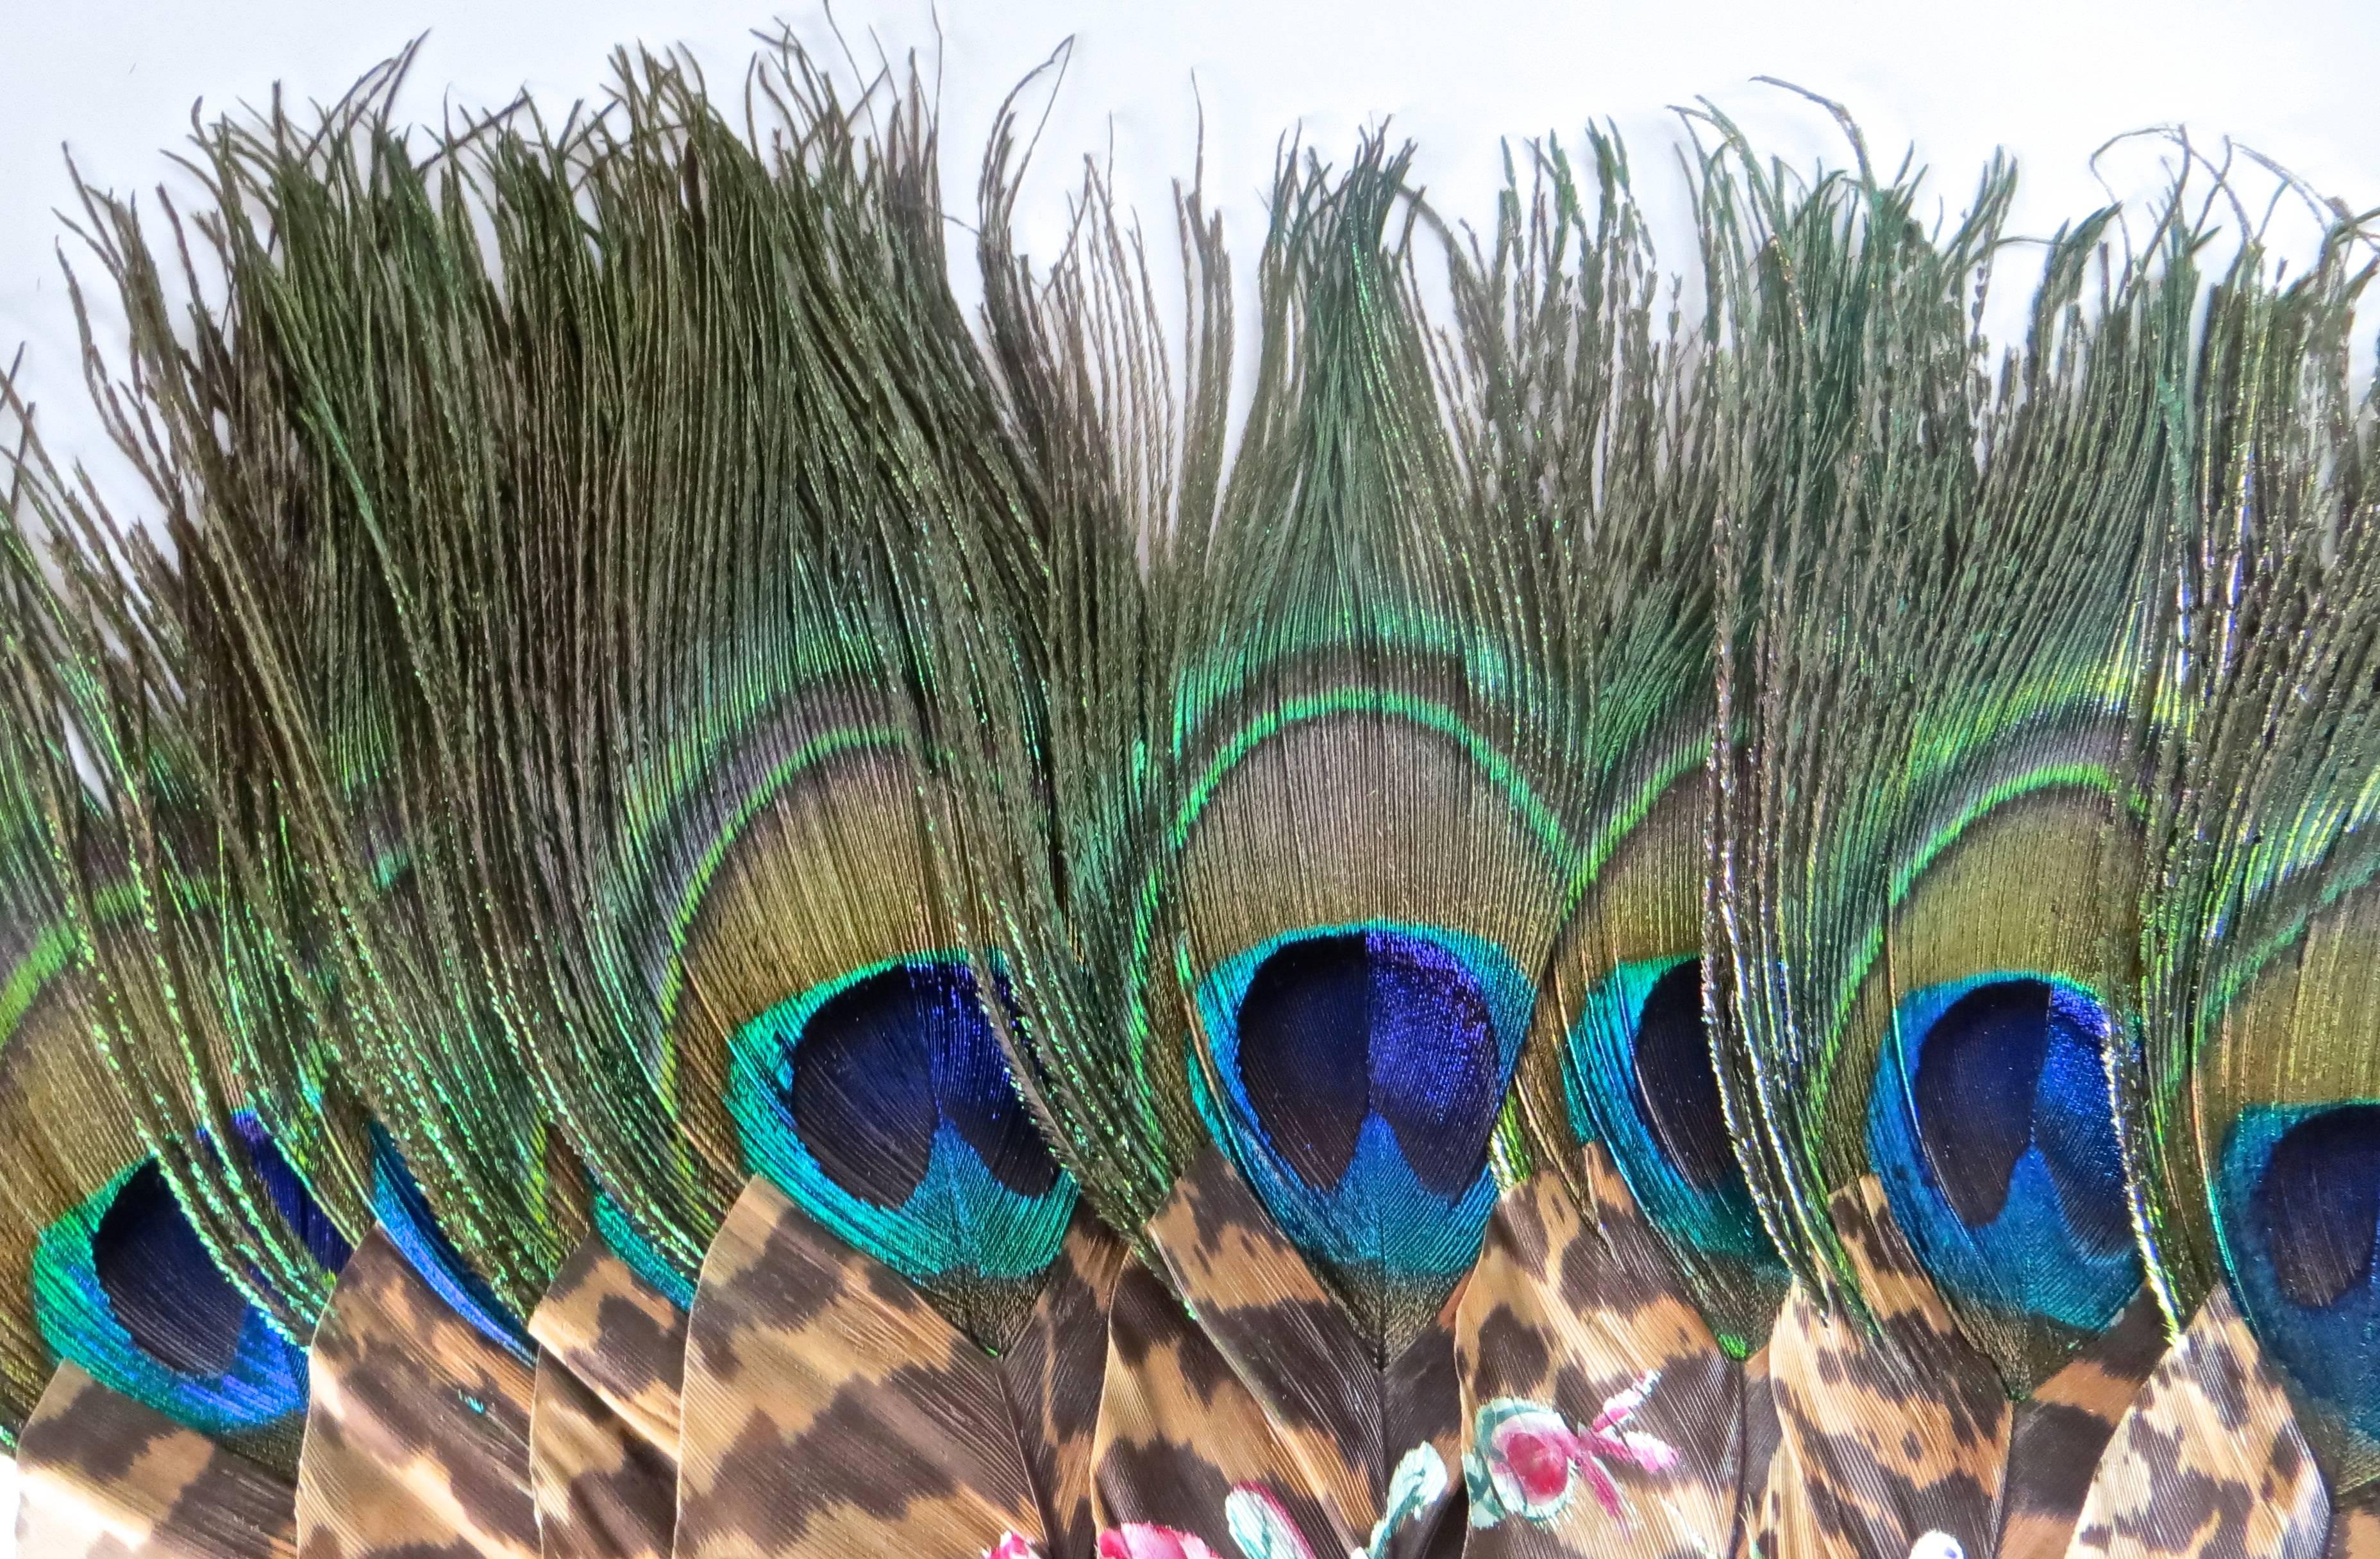 Vintage fan; the upper portion peacock 